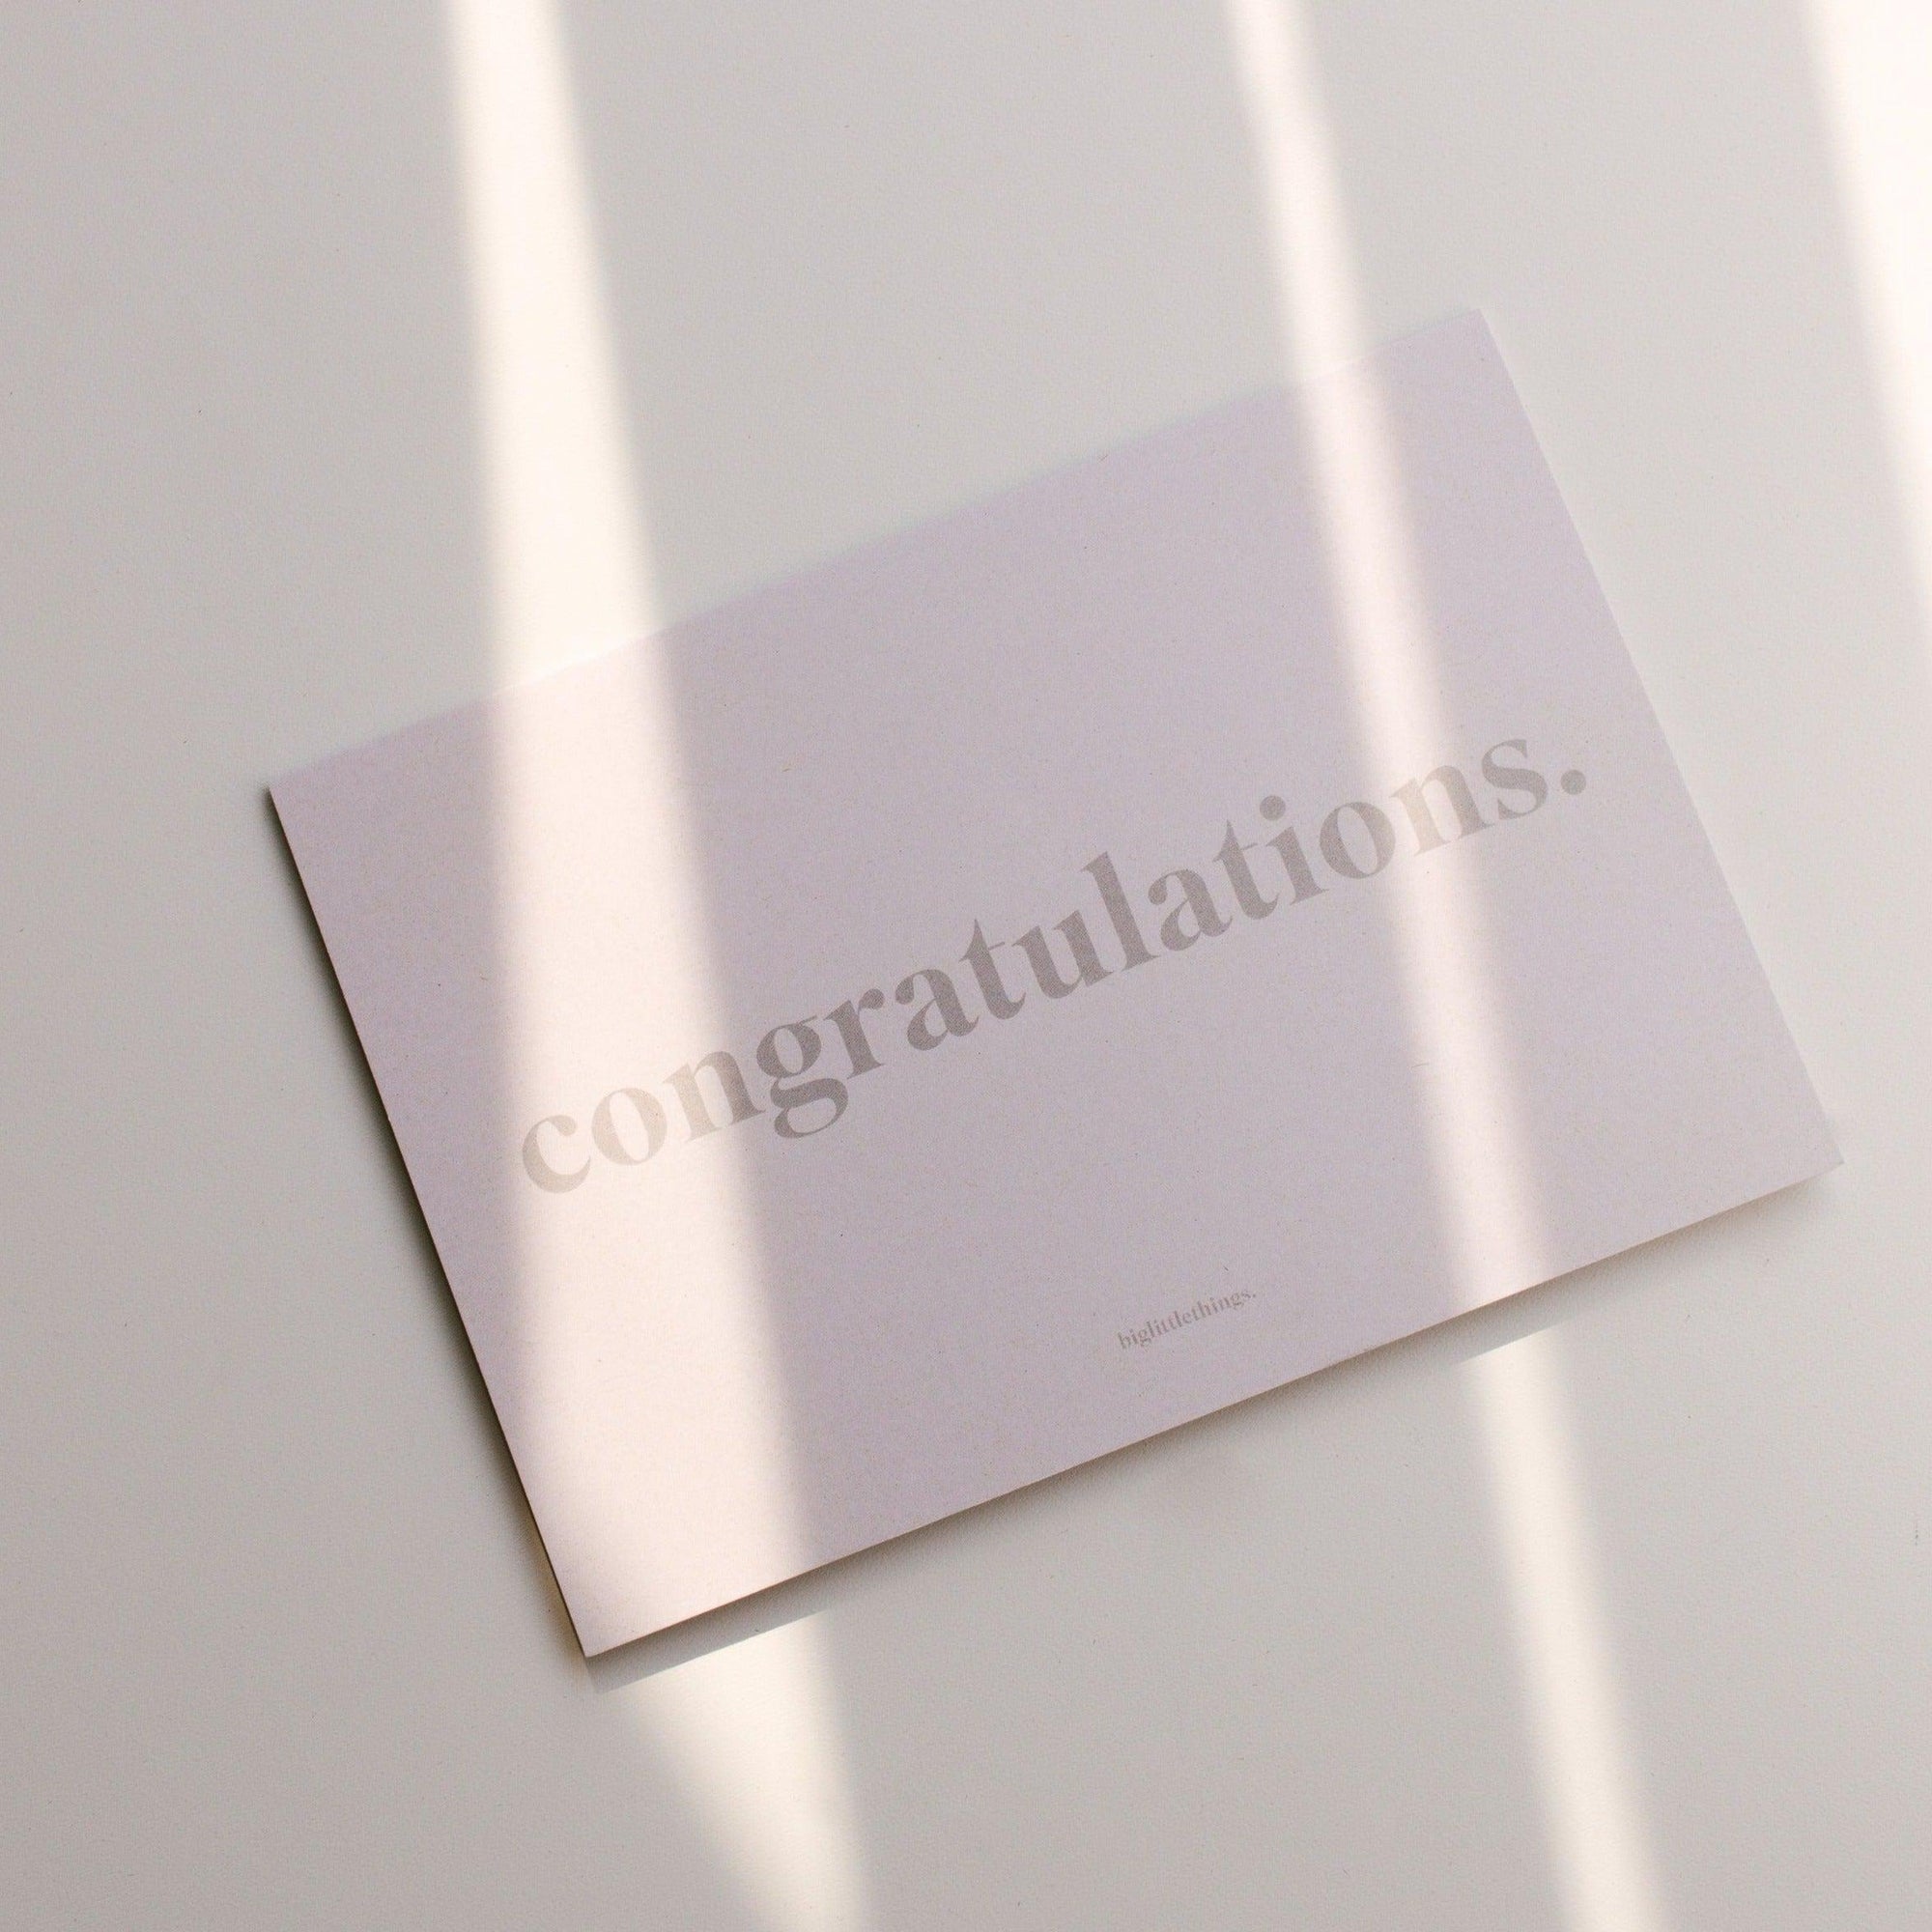 Congratulations card - biglittlethings' send a gift voucher on virtual shelves.